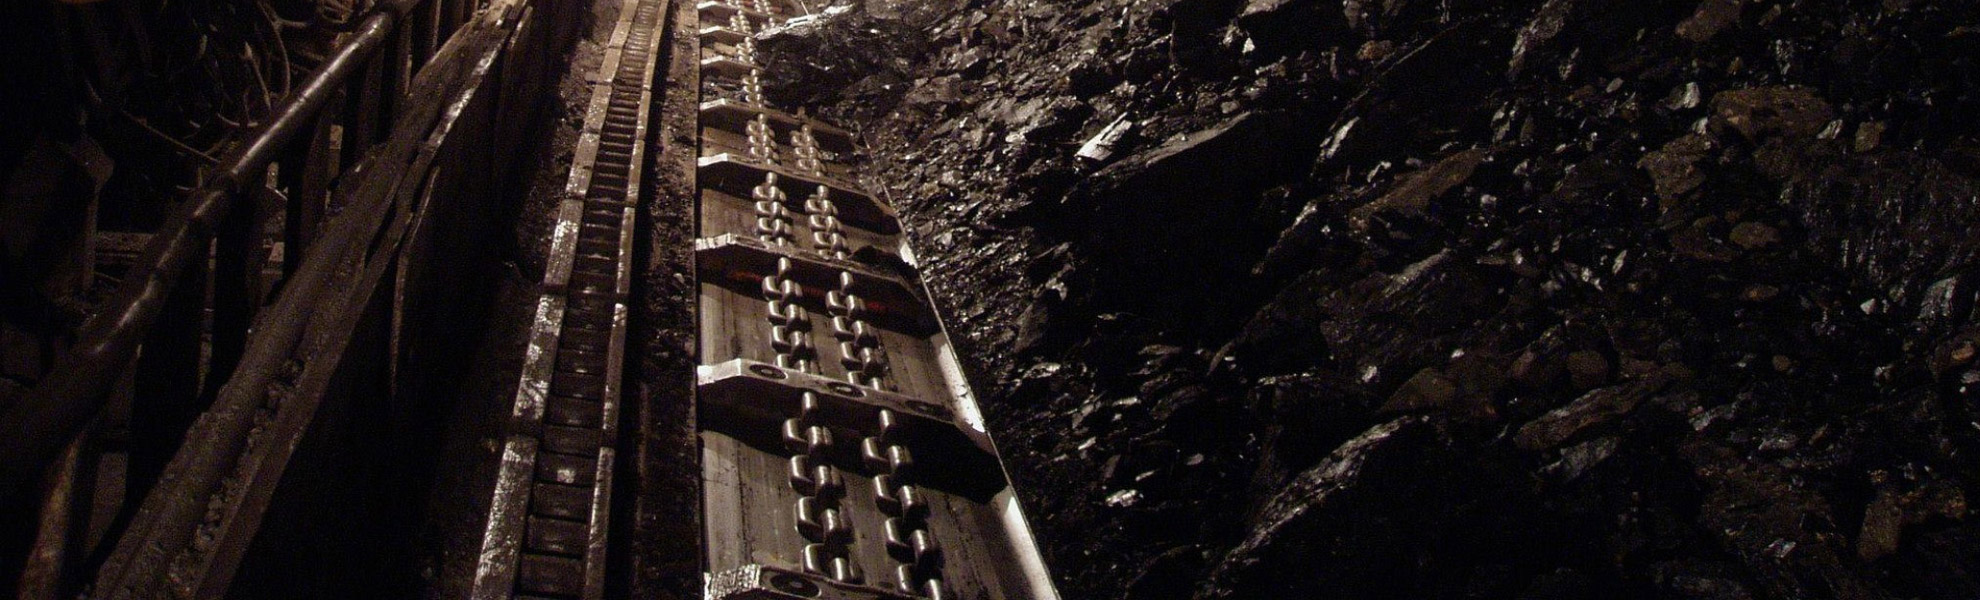 CICSA scraper conveyor for the mining industry